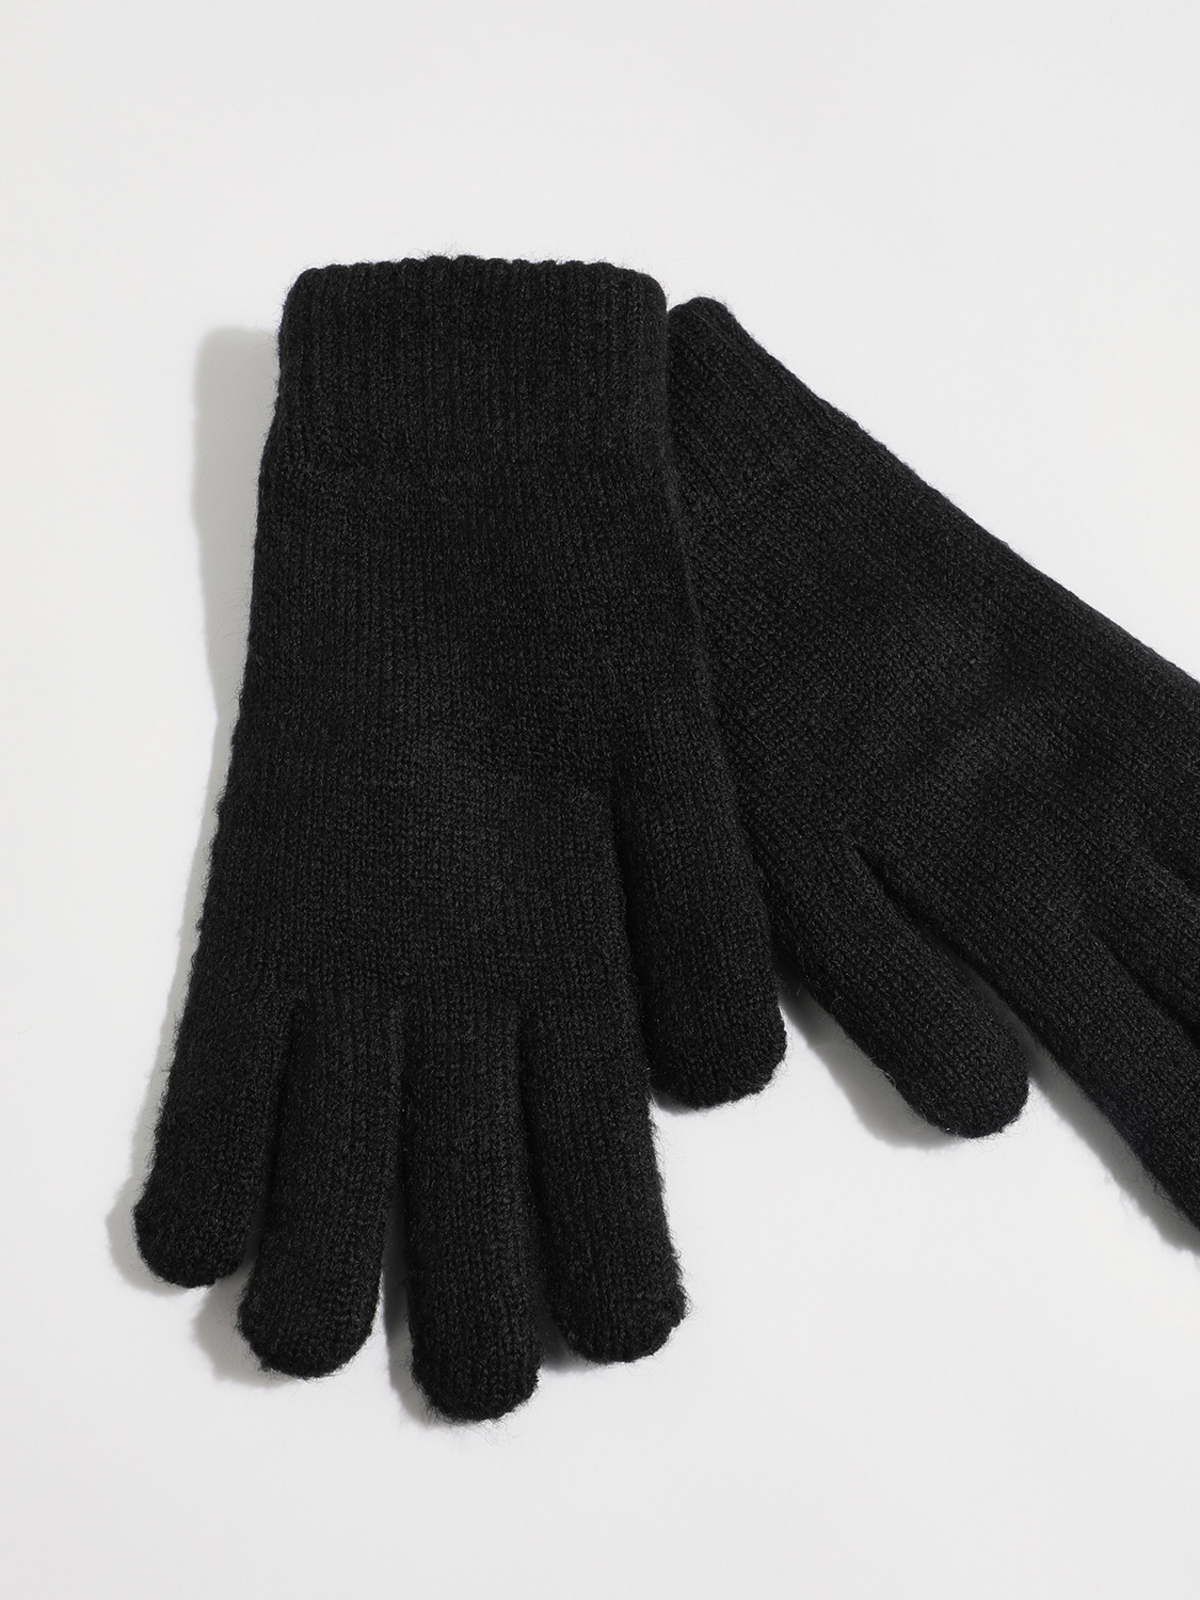 Barts gants noir femme